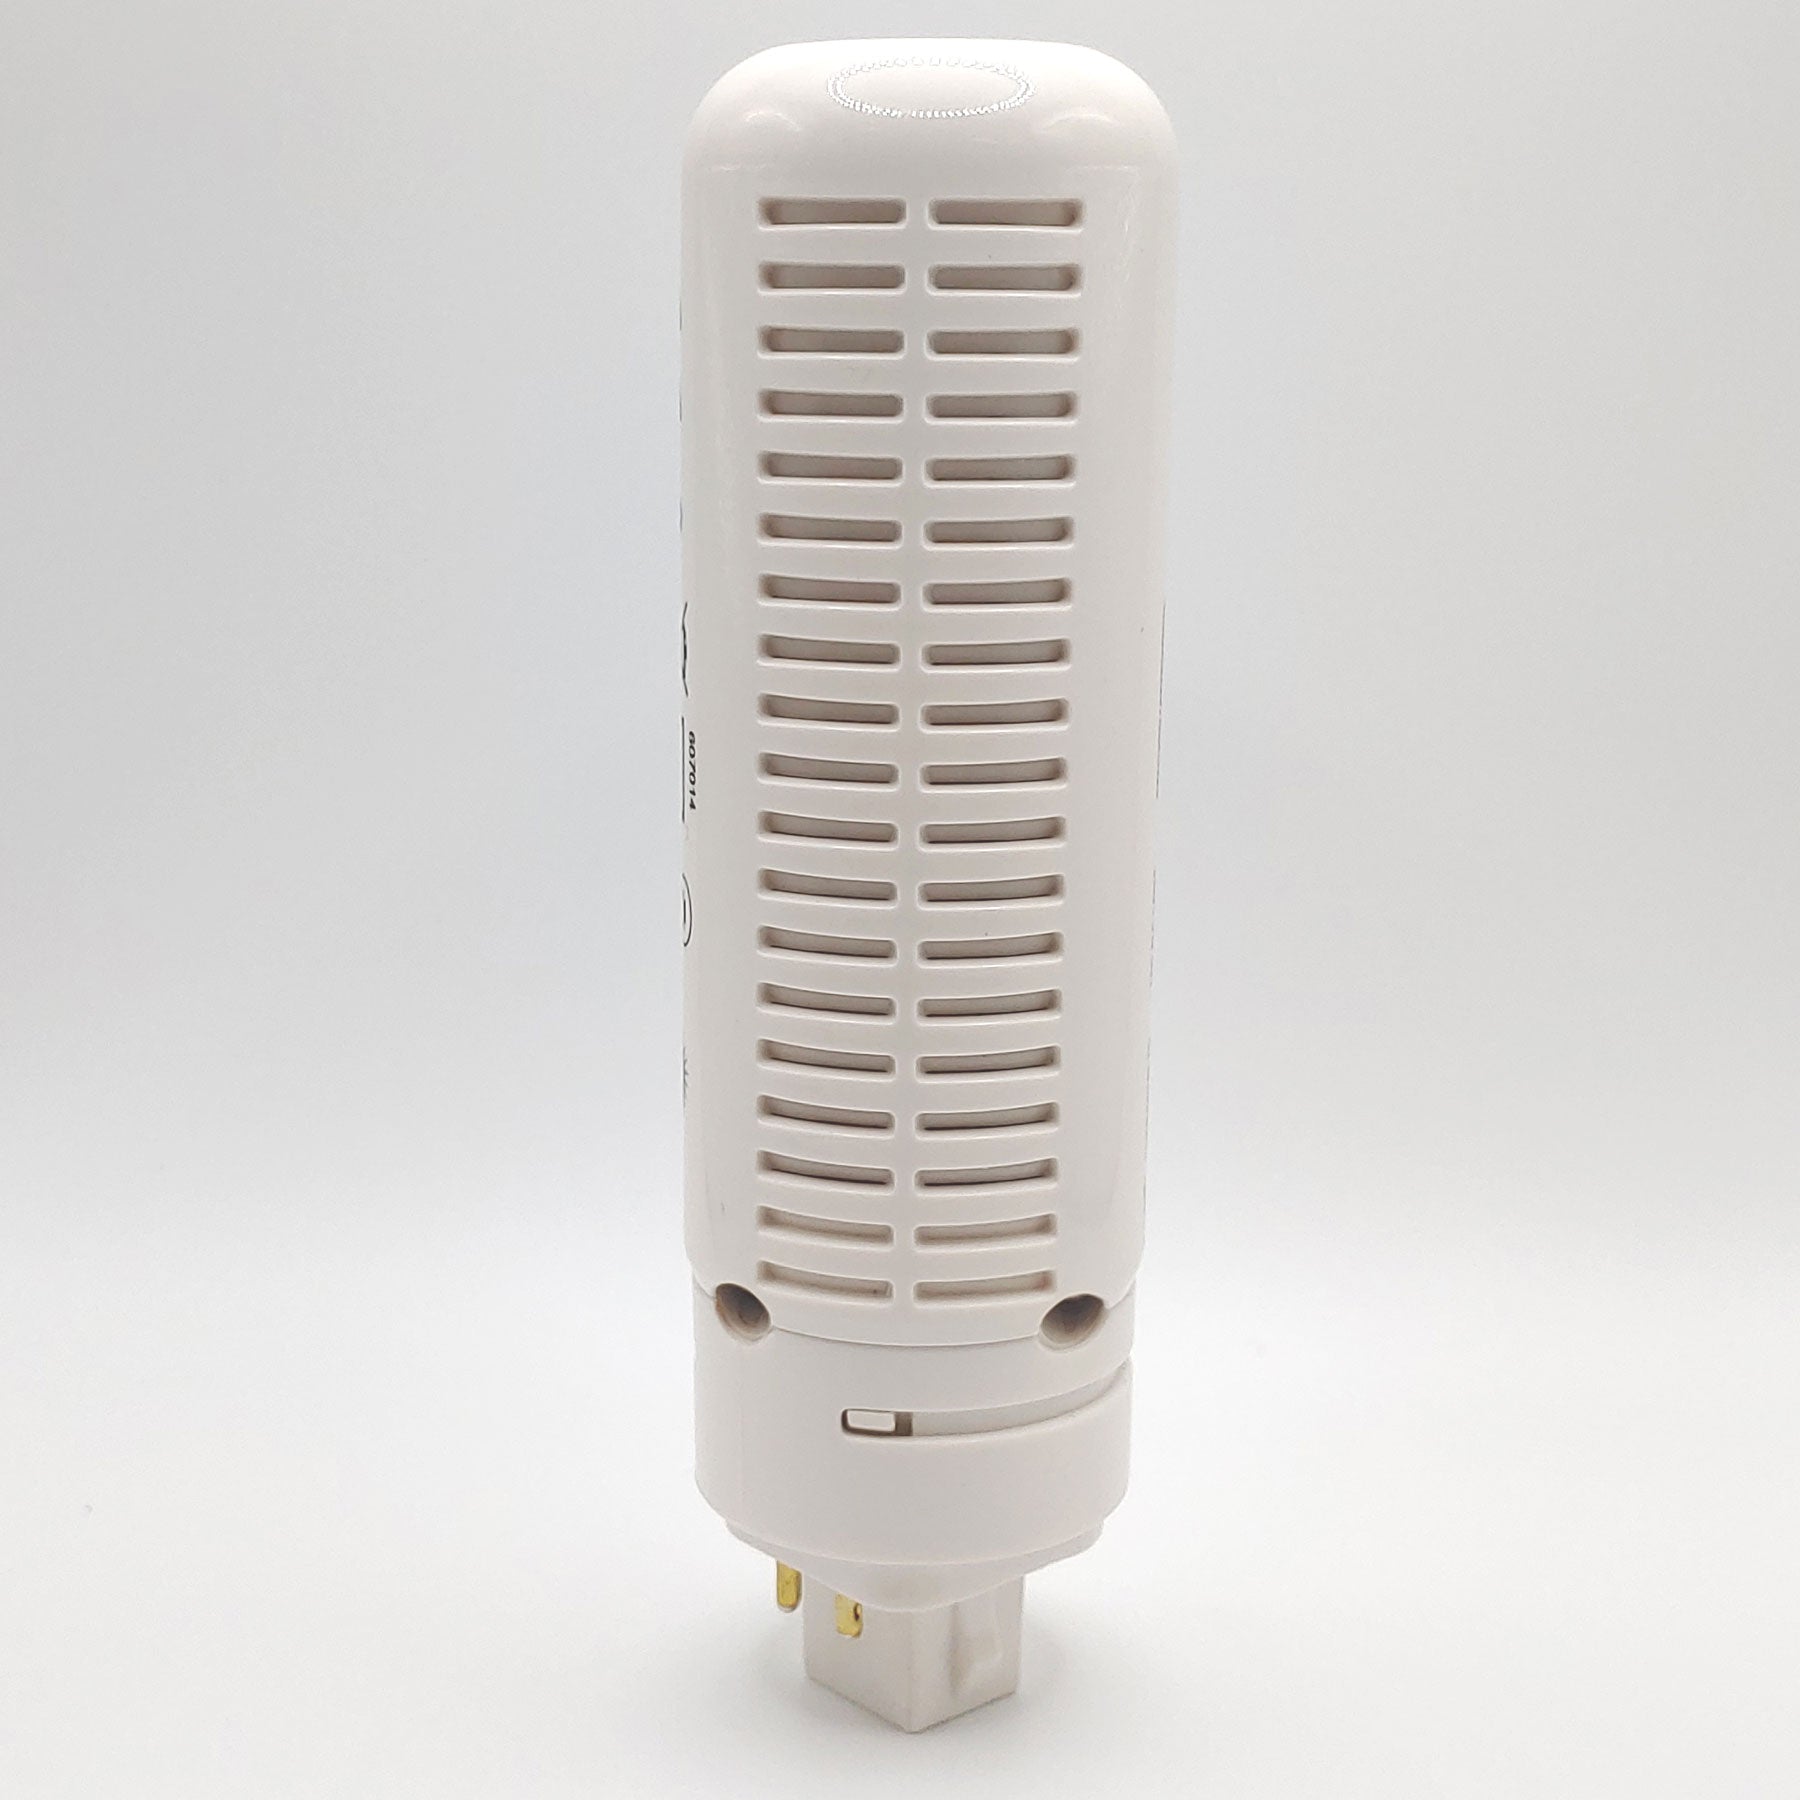 8.5-Watt G24Q (4-Pin) CFL Replacement LED Light Bulb Horizontal Applications Only